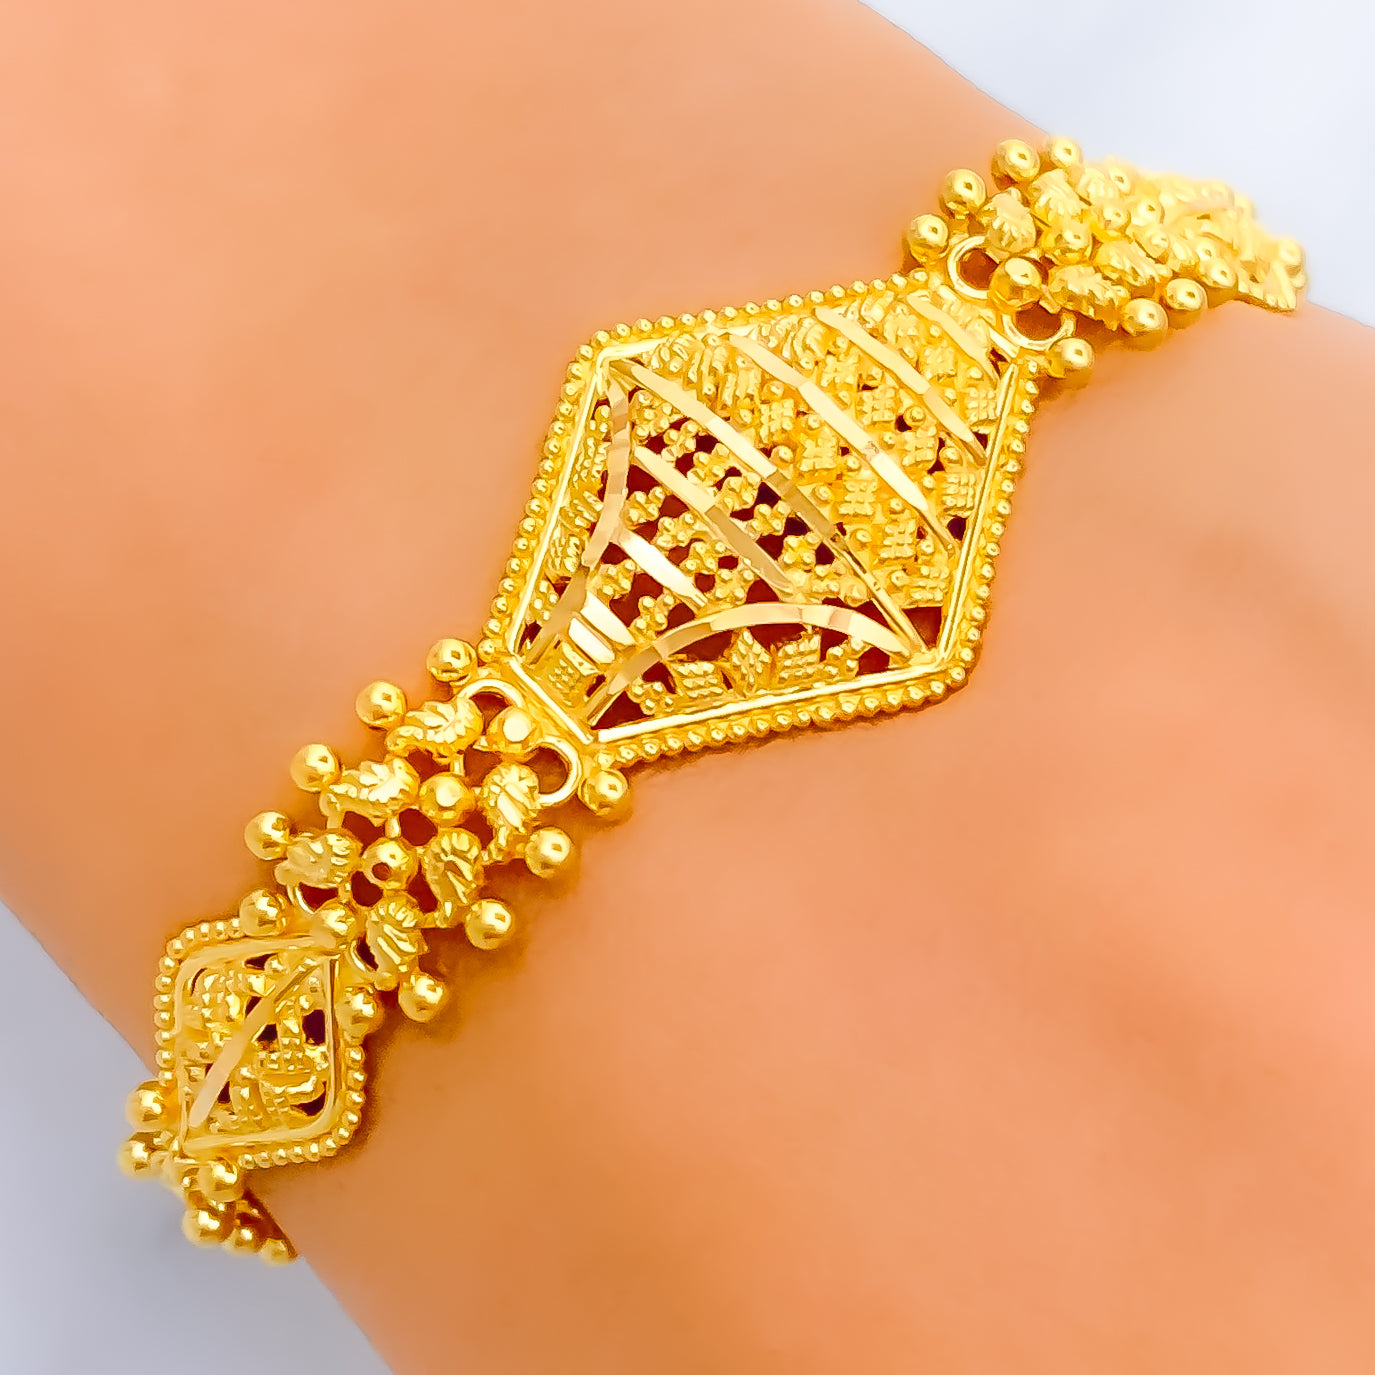 22K Yellow gold Men's Bracelet Beautifully handcrafted diamond cut design  106 | eBay